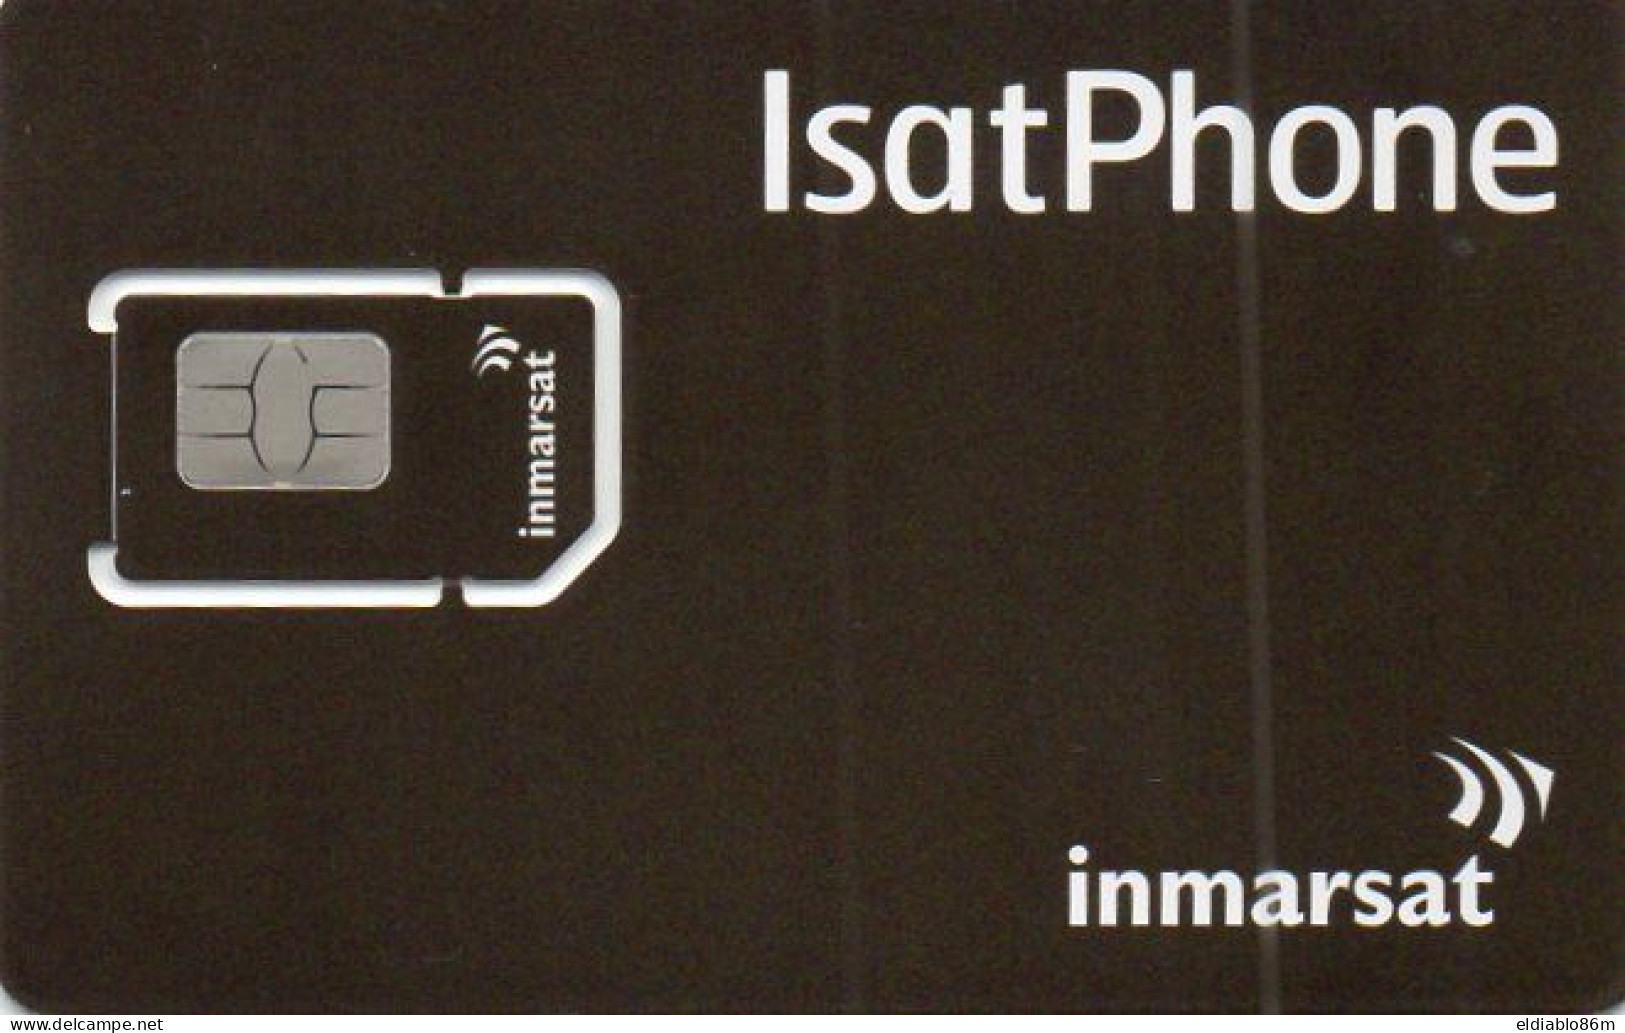 GSM CARD - SATELLITE CARD - INMARSAT - ISATPHONE - MINT - Unknown Origin